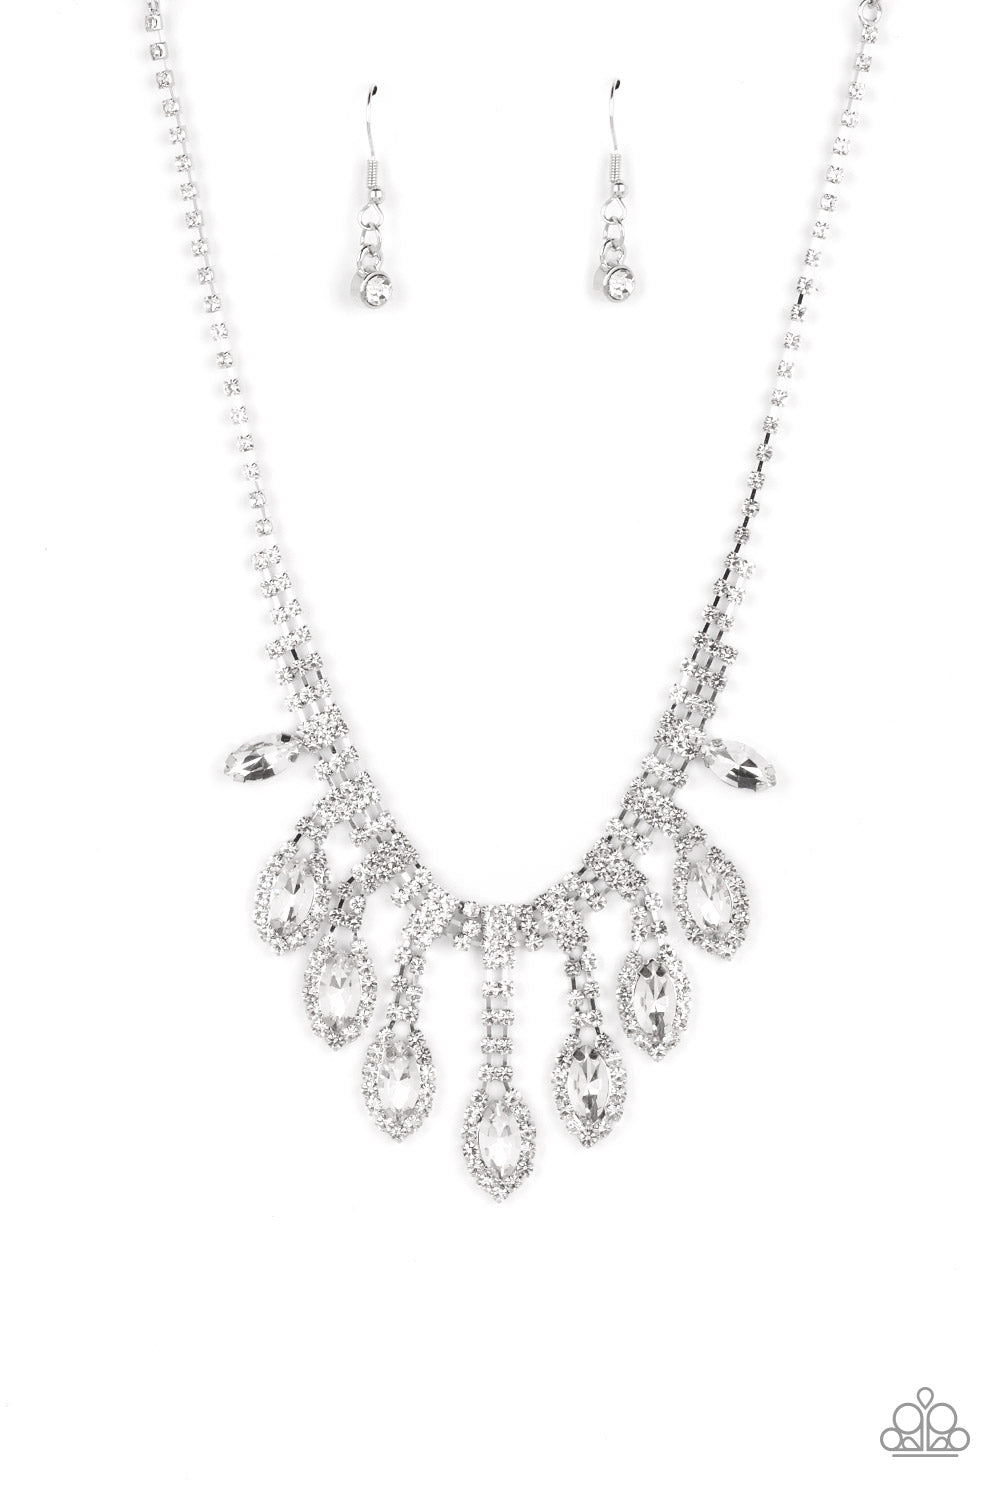 REIGNING Romance White Rhinestone Necklace - Paparazzi Accessories- lightbox - CarasShop.com - $5 Jewelry by Cara Jewels